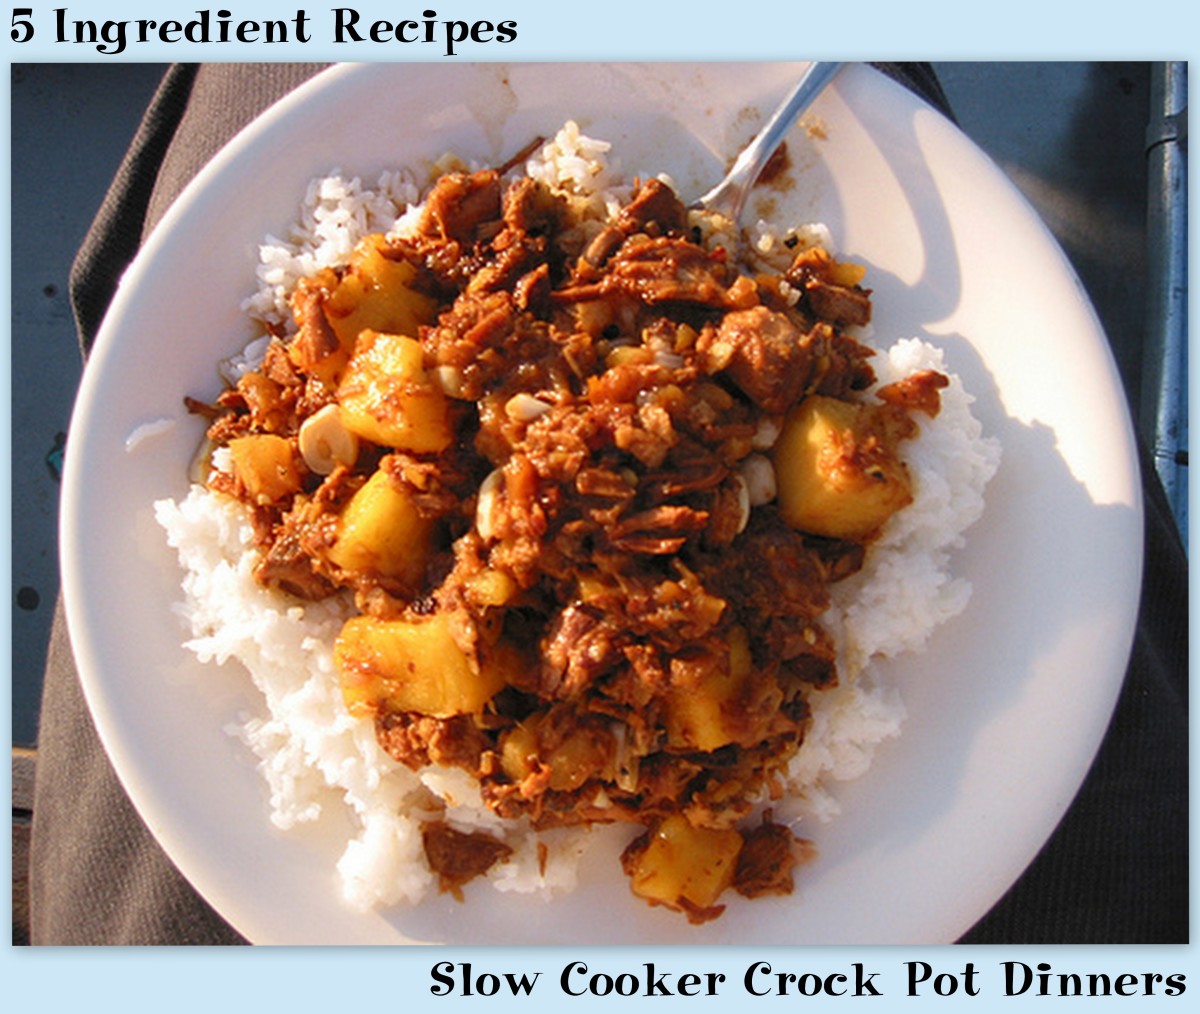 5 Five Ingredient Recipes: Slow Cooker Crock Pot Dinners